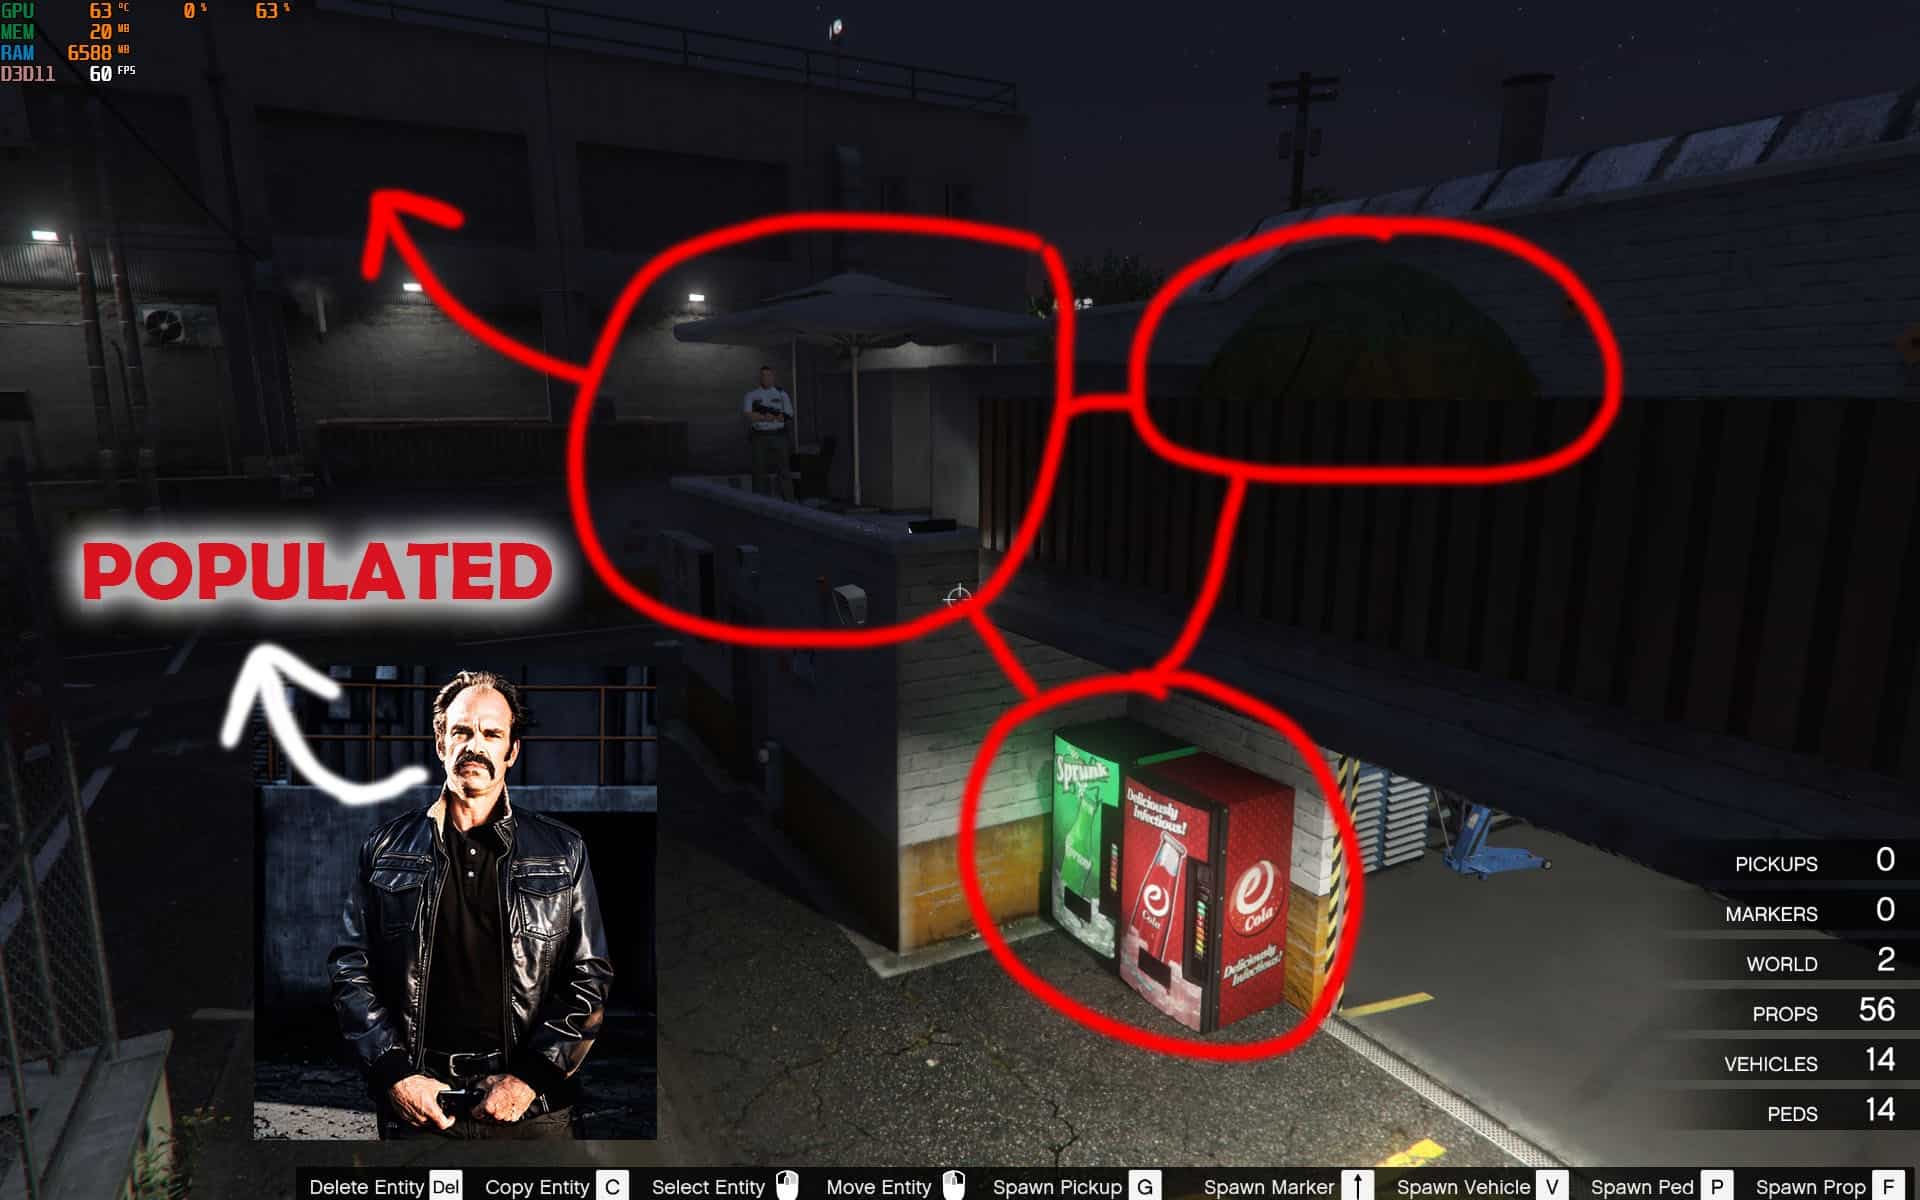 Enhanced Car Dealership [MapEditor] 1.0 - GTA 5 Mod | Grand Theft Auto